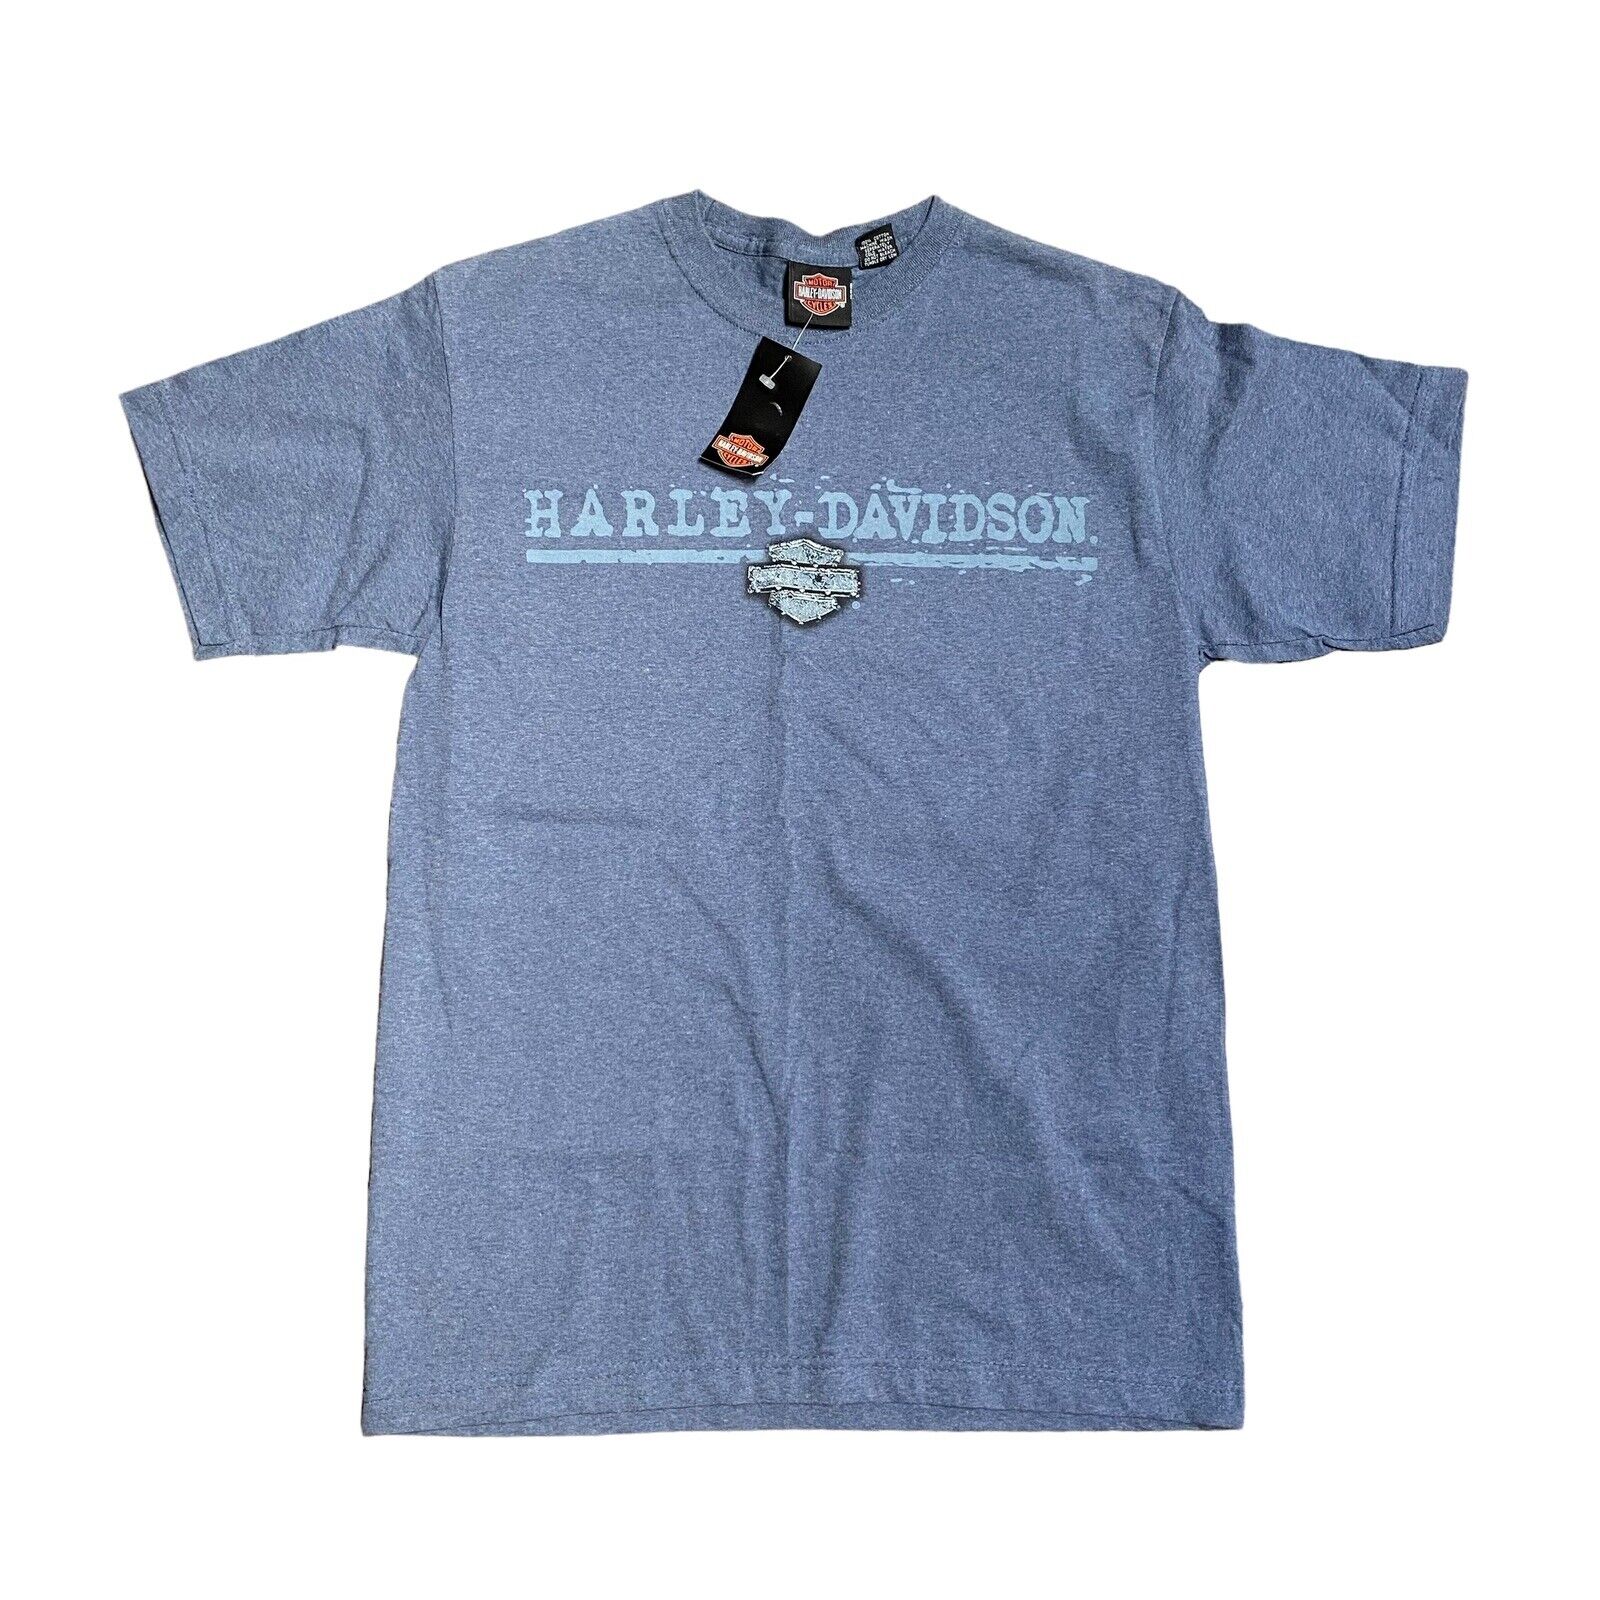 Harley-Davidson Shirt Medium Indigo Blue Tee With Tags